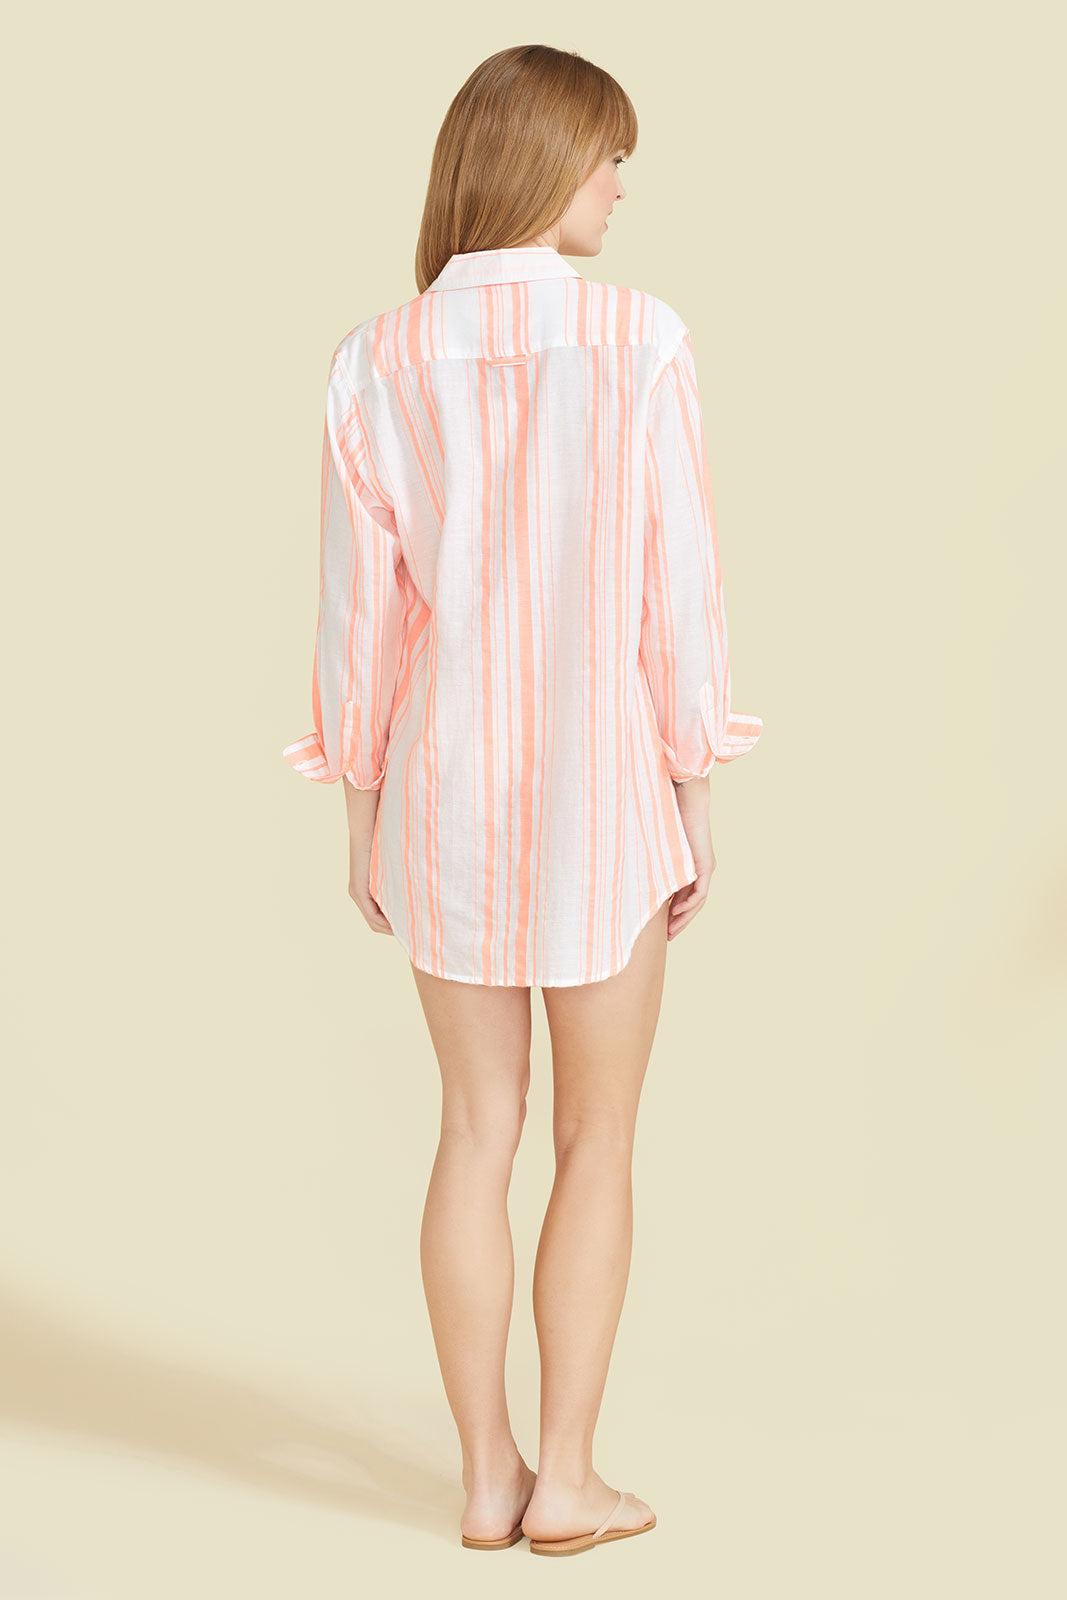 Primavera Shirt Dress by Sitano